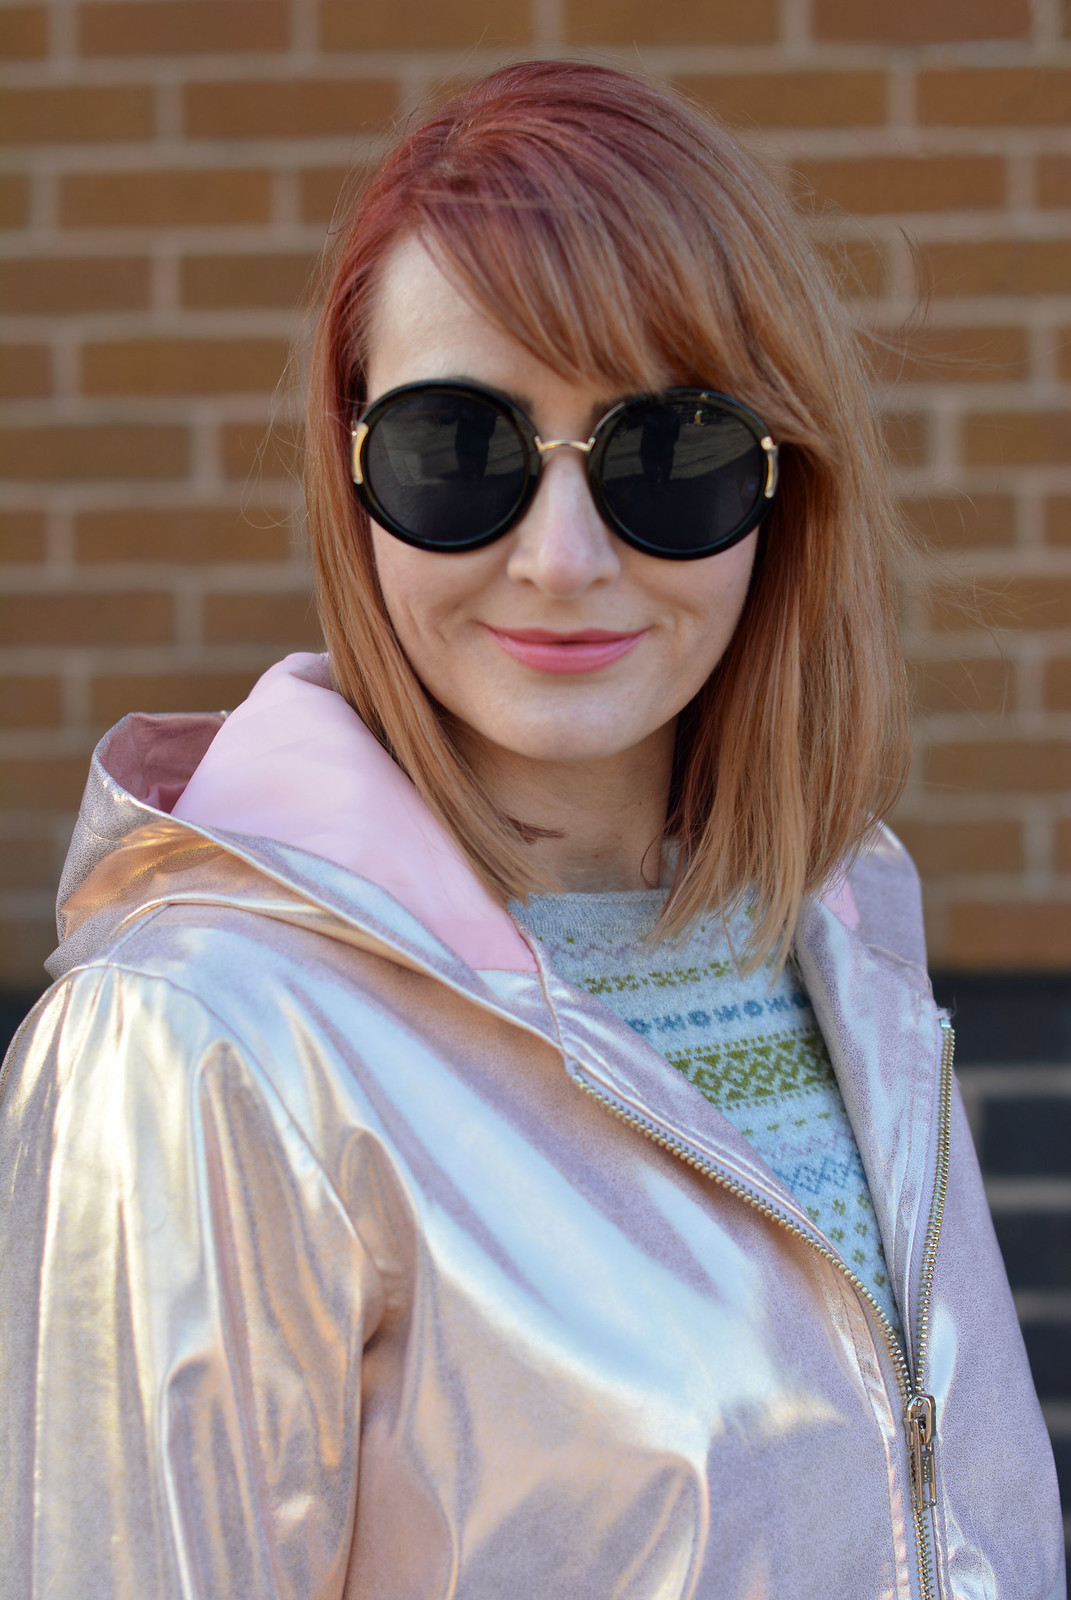 Rose gold metallic rain coat, oversized round sunglasses | Not Dressed As Lamb